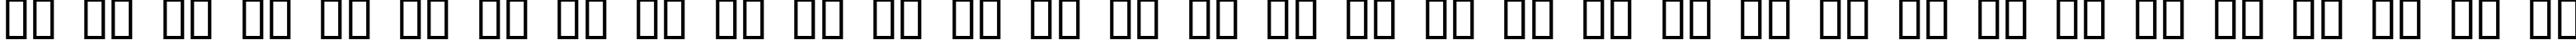 Пример написания русского алфавита шрифтом Konspiracy Theory slant